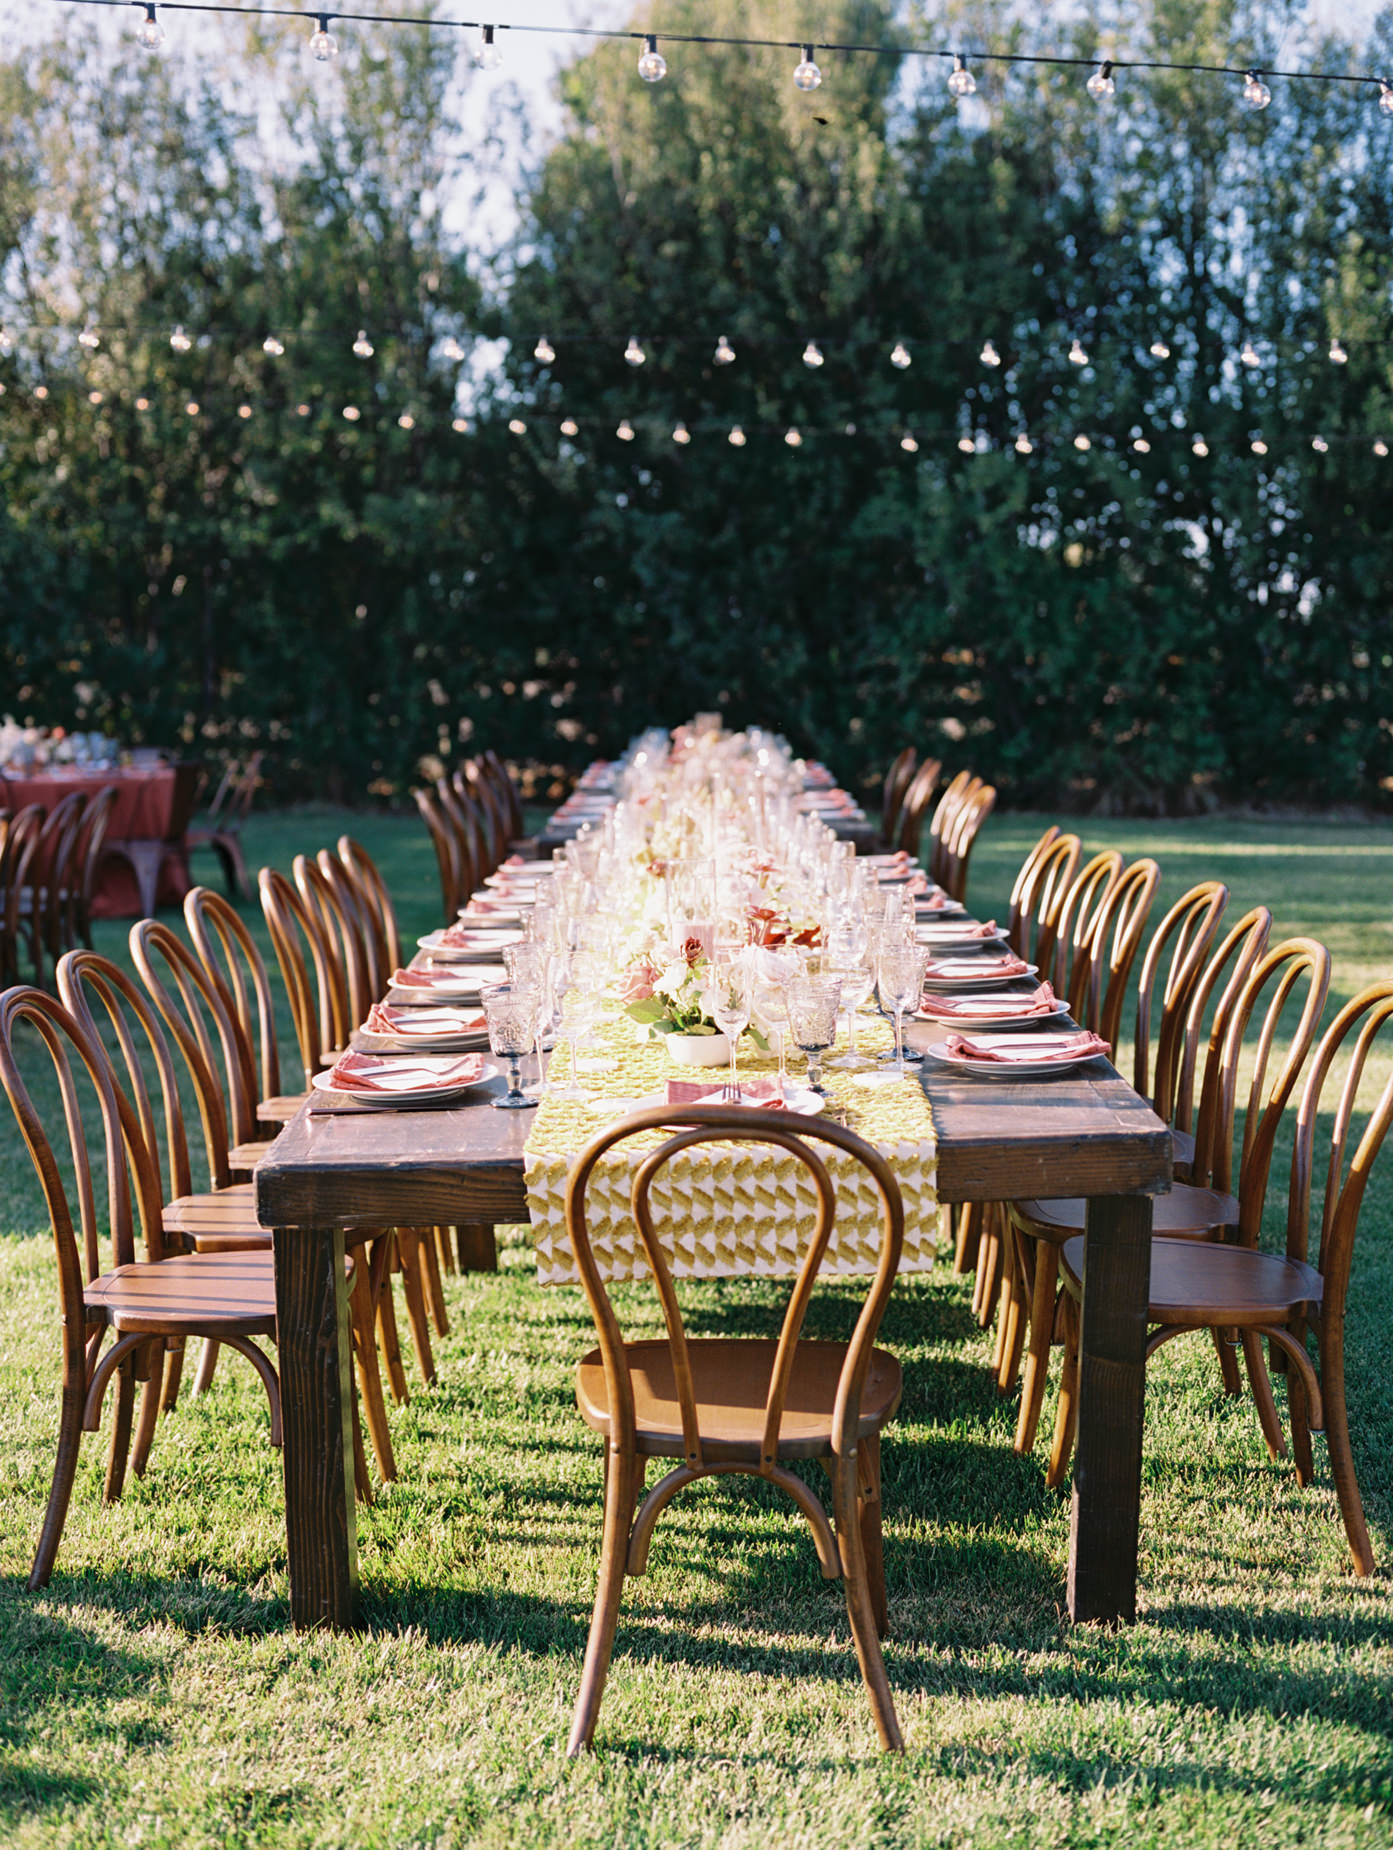 Greengate Ranch and Vineyard wedding reception in San Luis Obispo